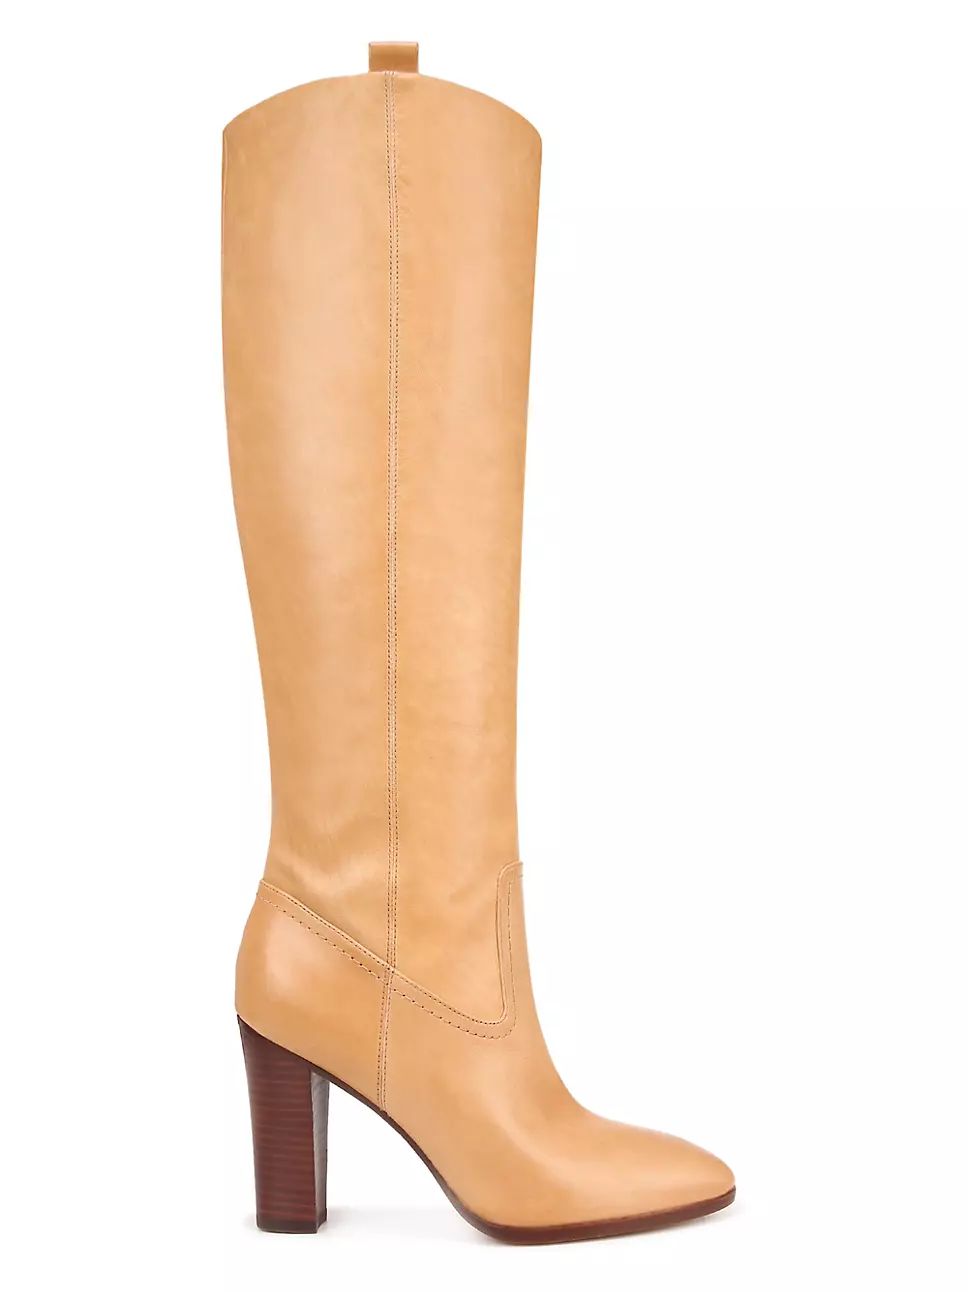 Veronica Beard Vesper 95MM Leather Knee-High Boots | Saks Fifth Avenue